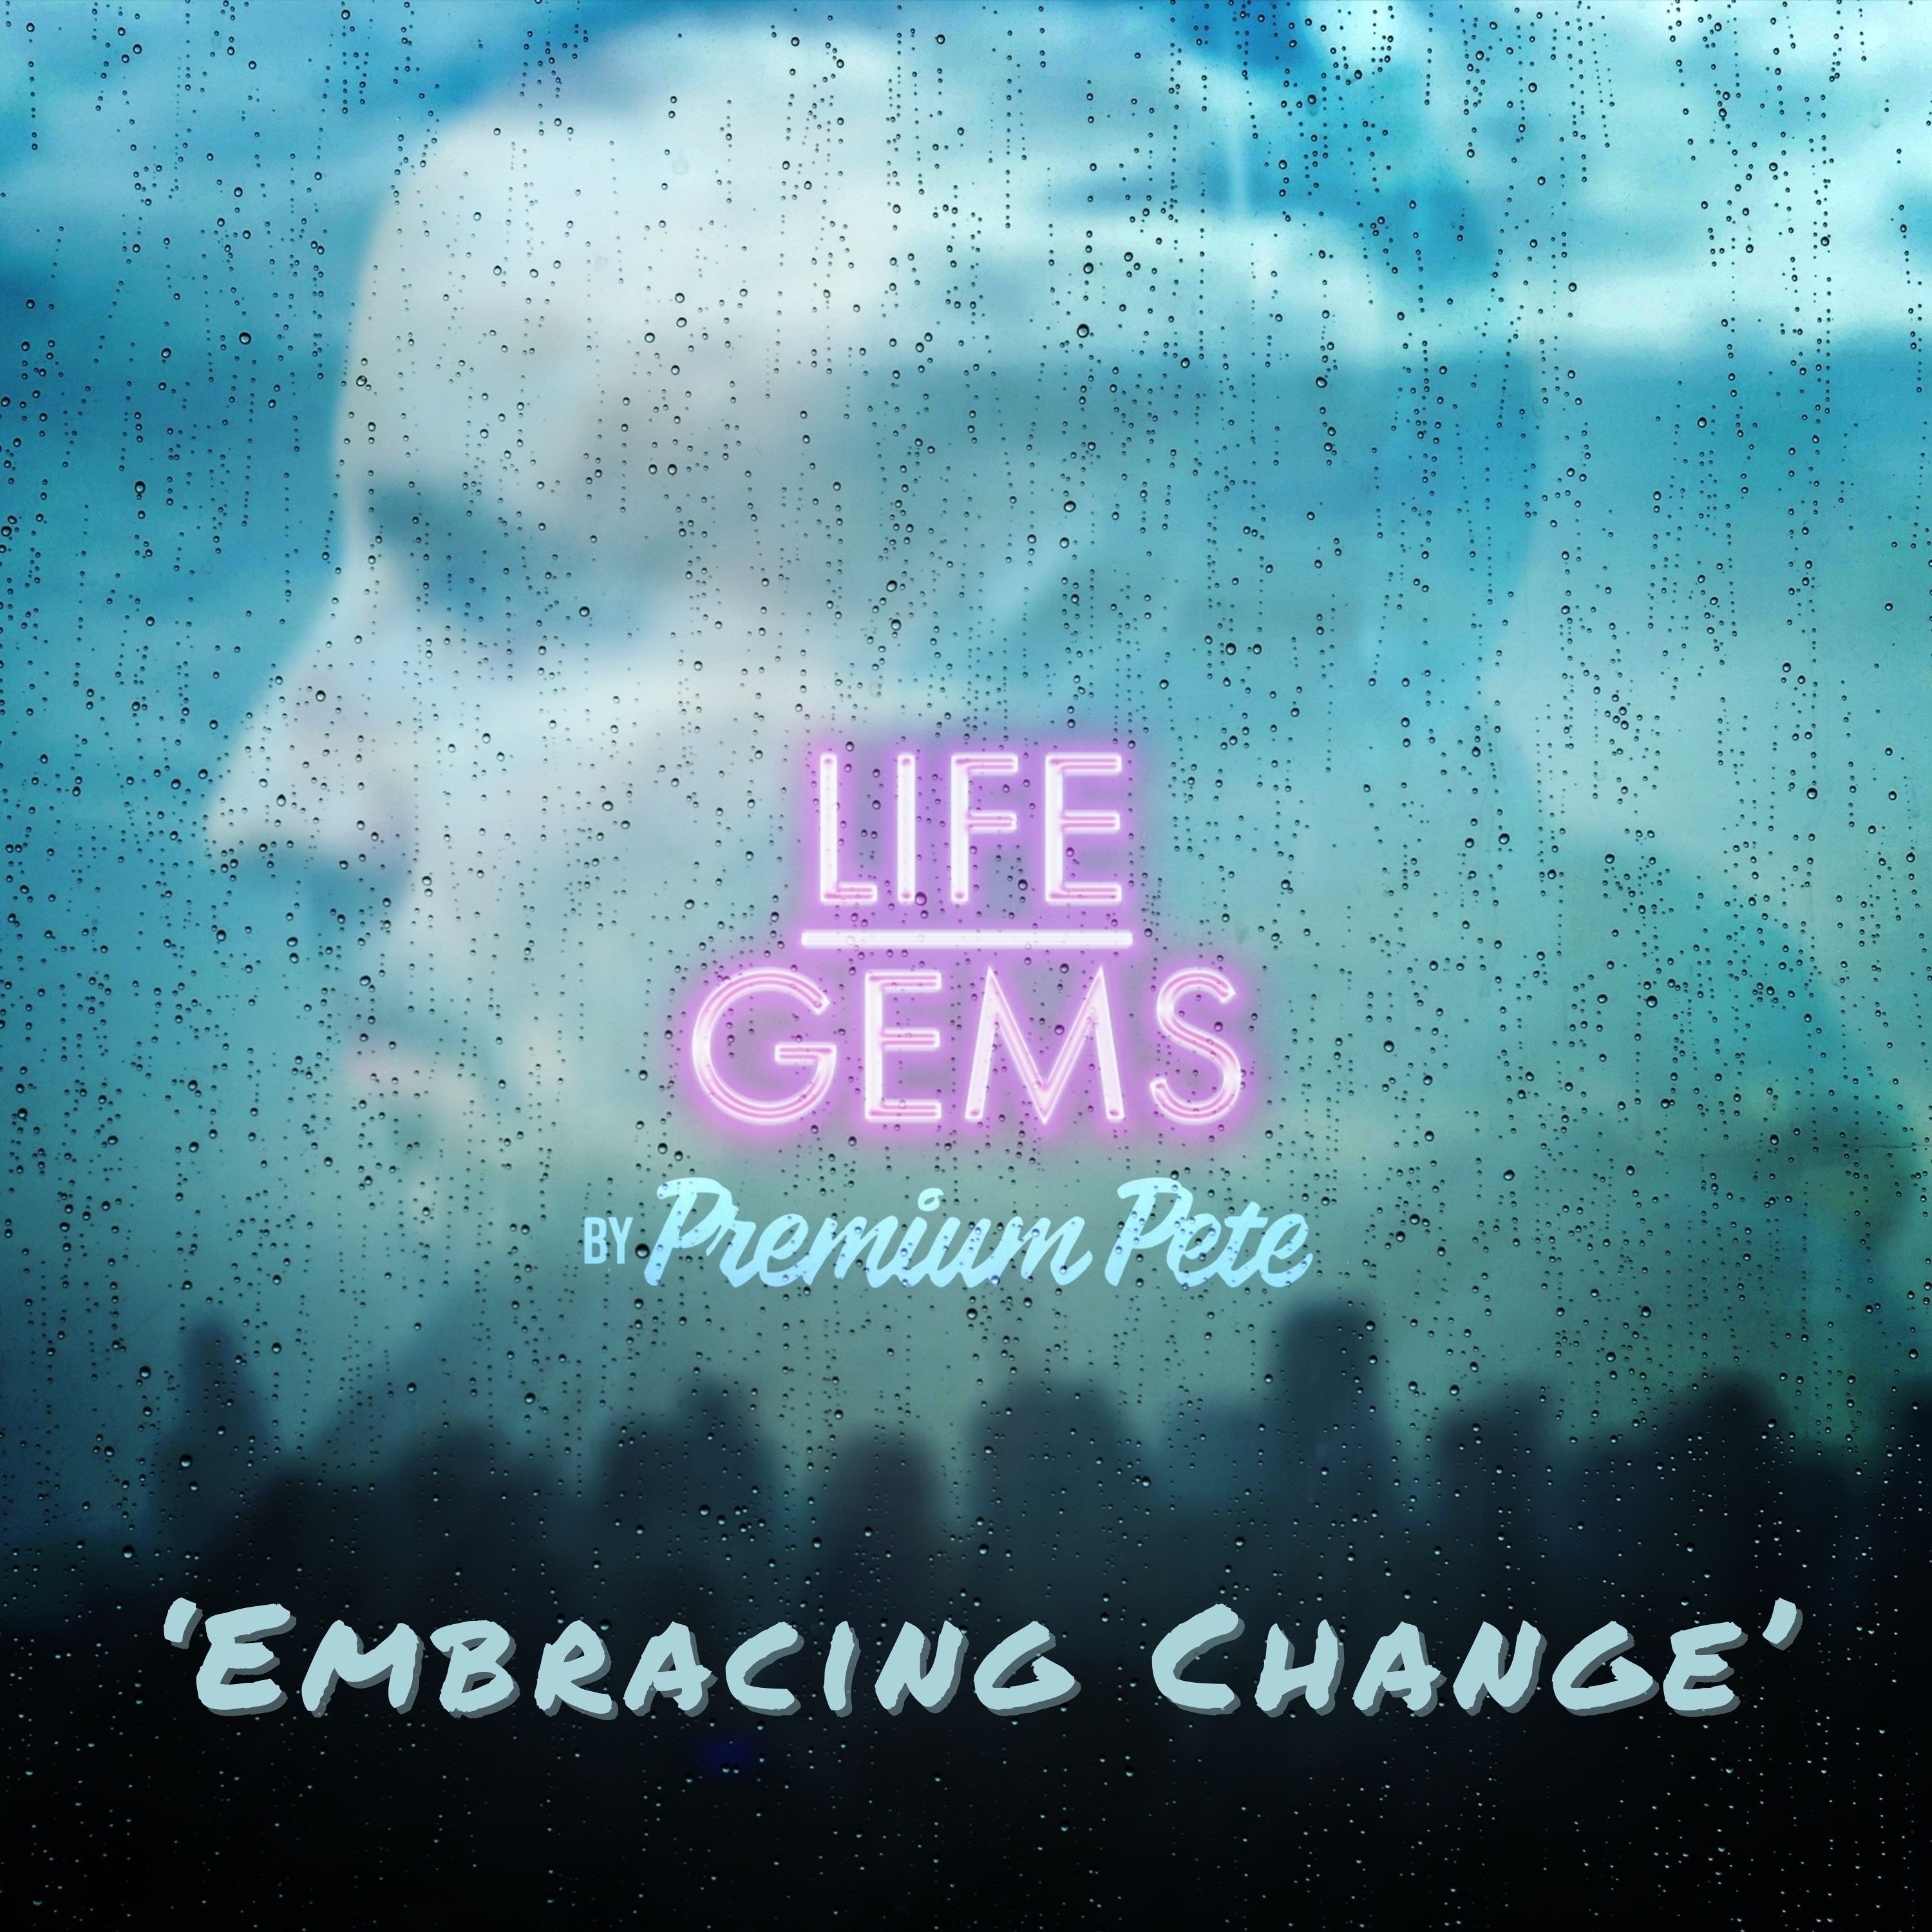 Life Gems ”Embracing Change”